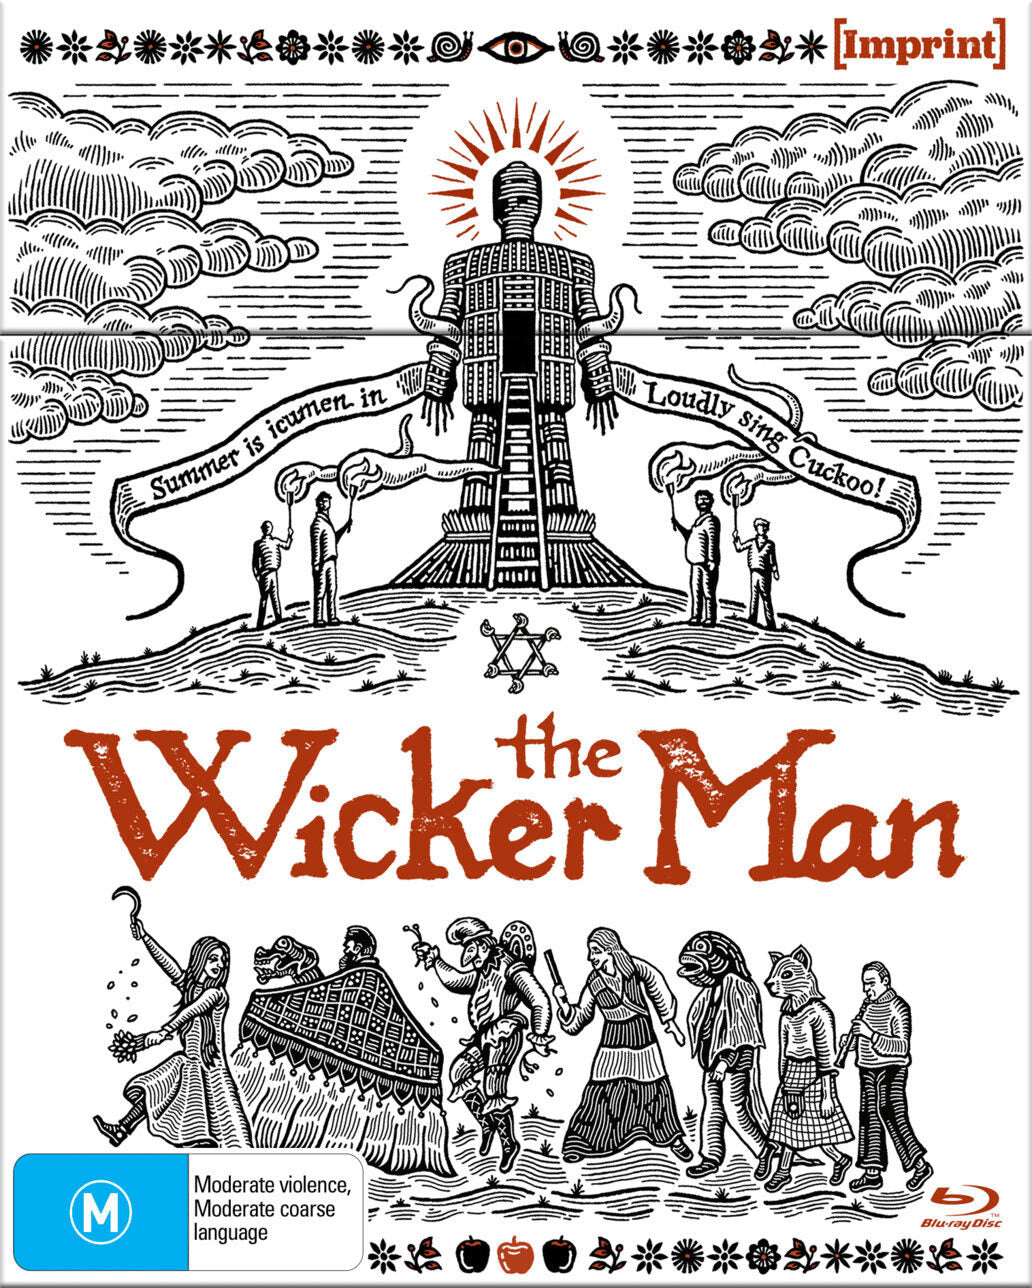 THE WICKER MAN (REGION FREE IMPORT - LIMITED EDITION) BLU-RAY/CD